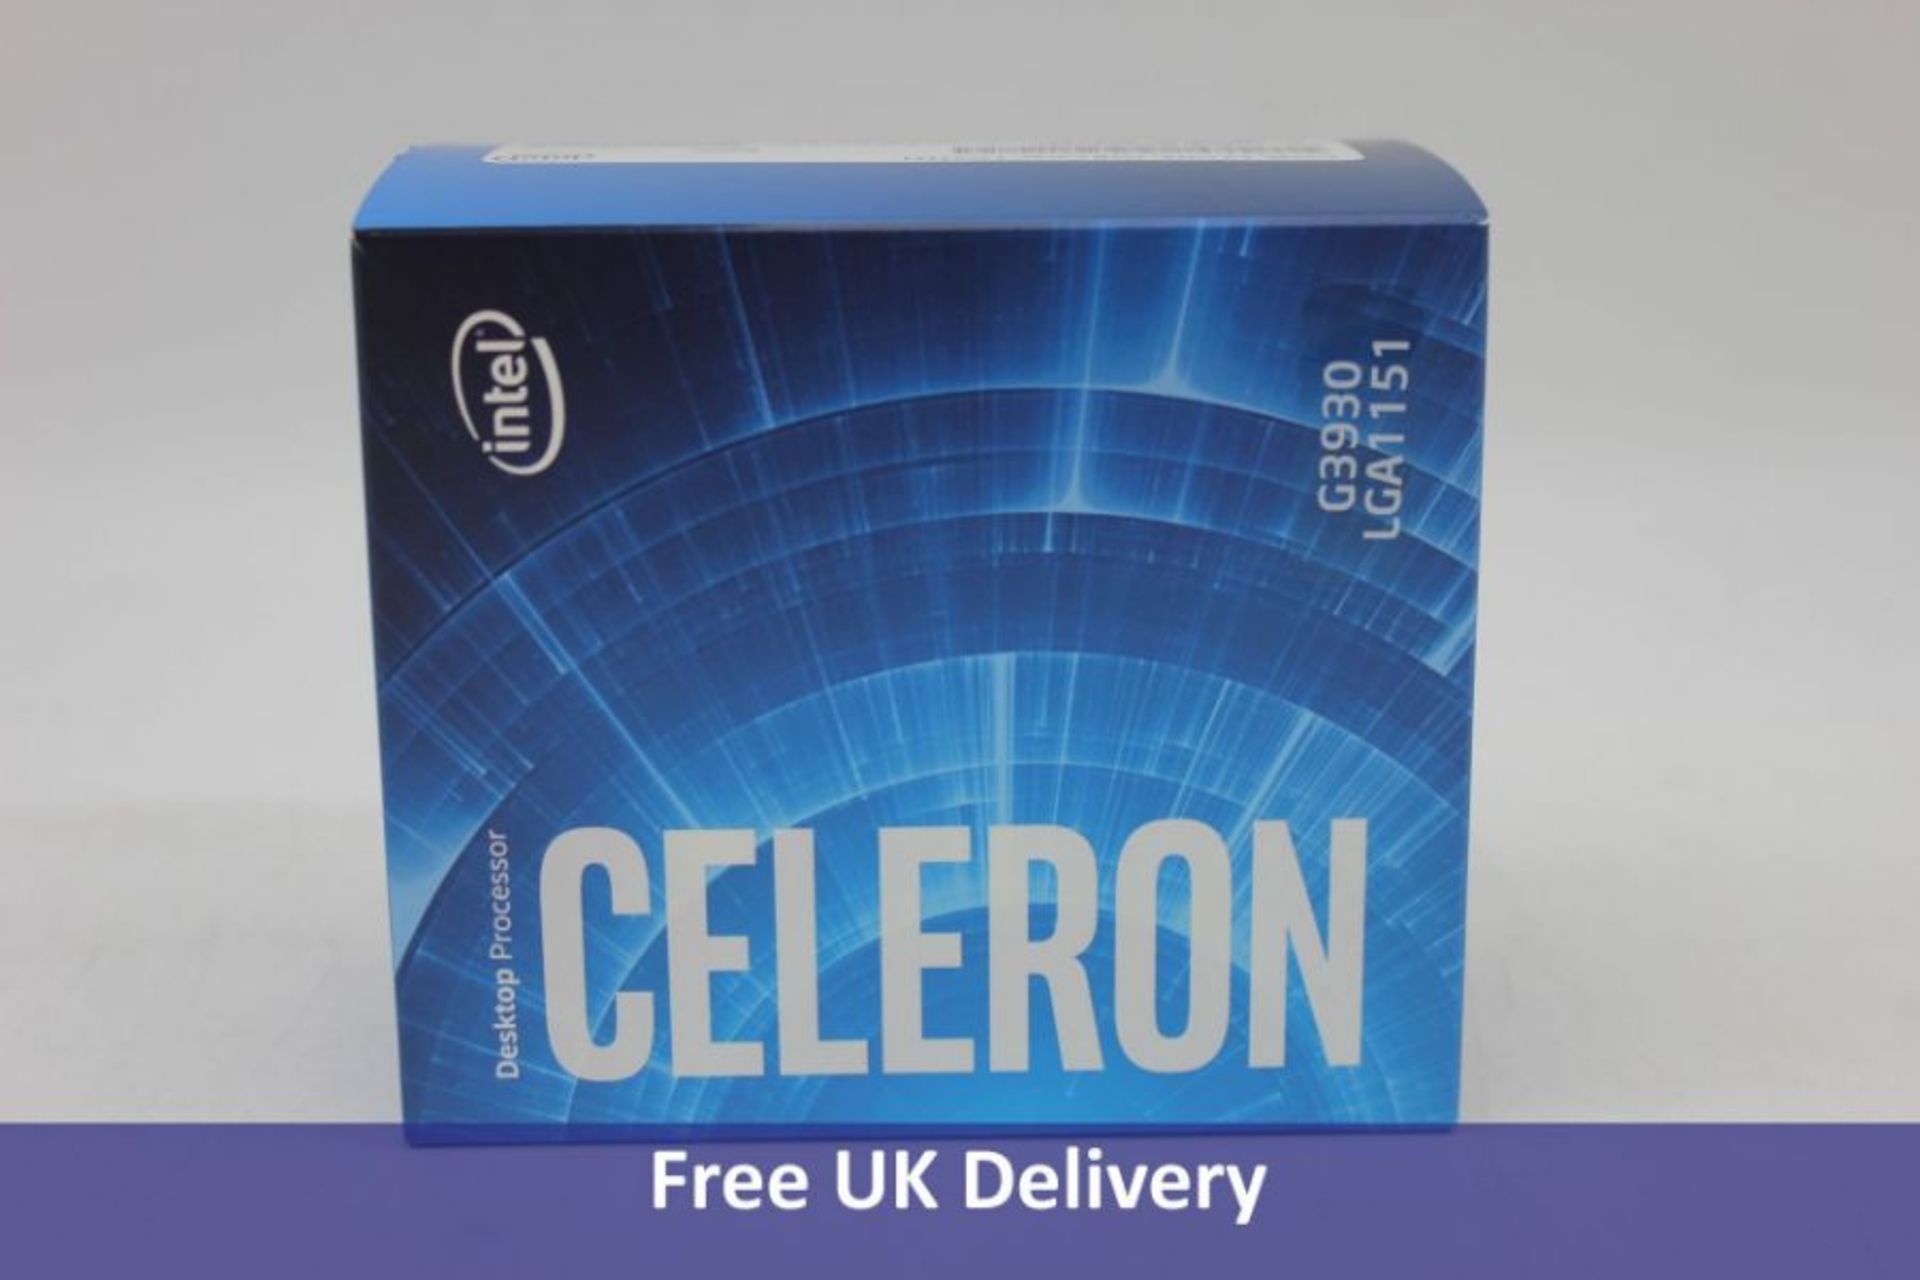 Five Intel Celeron G3930 processors, 2.9 GHz, Boxed, 2 MB Smart Cache